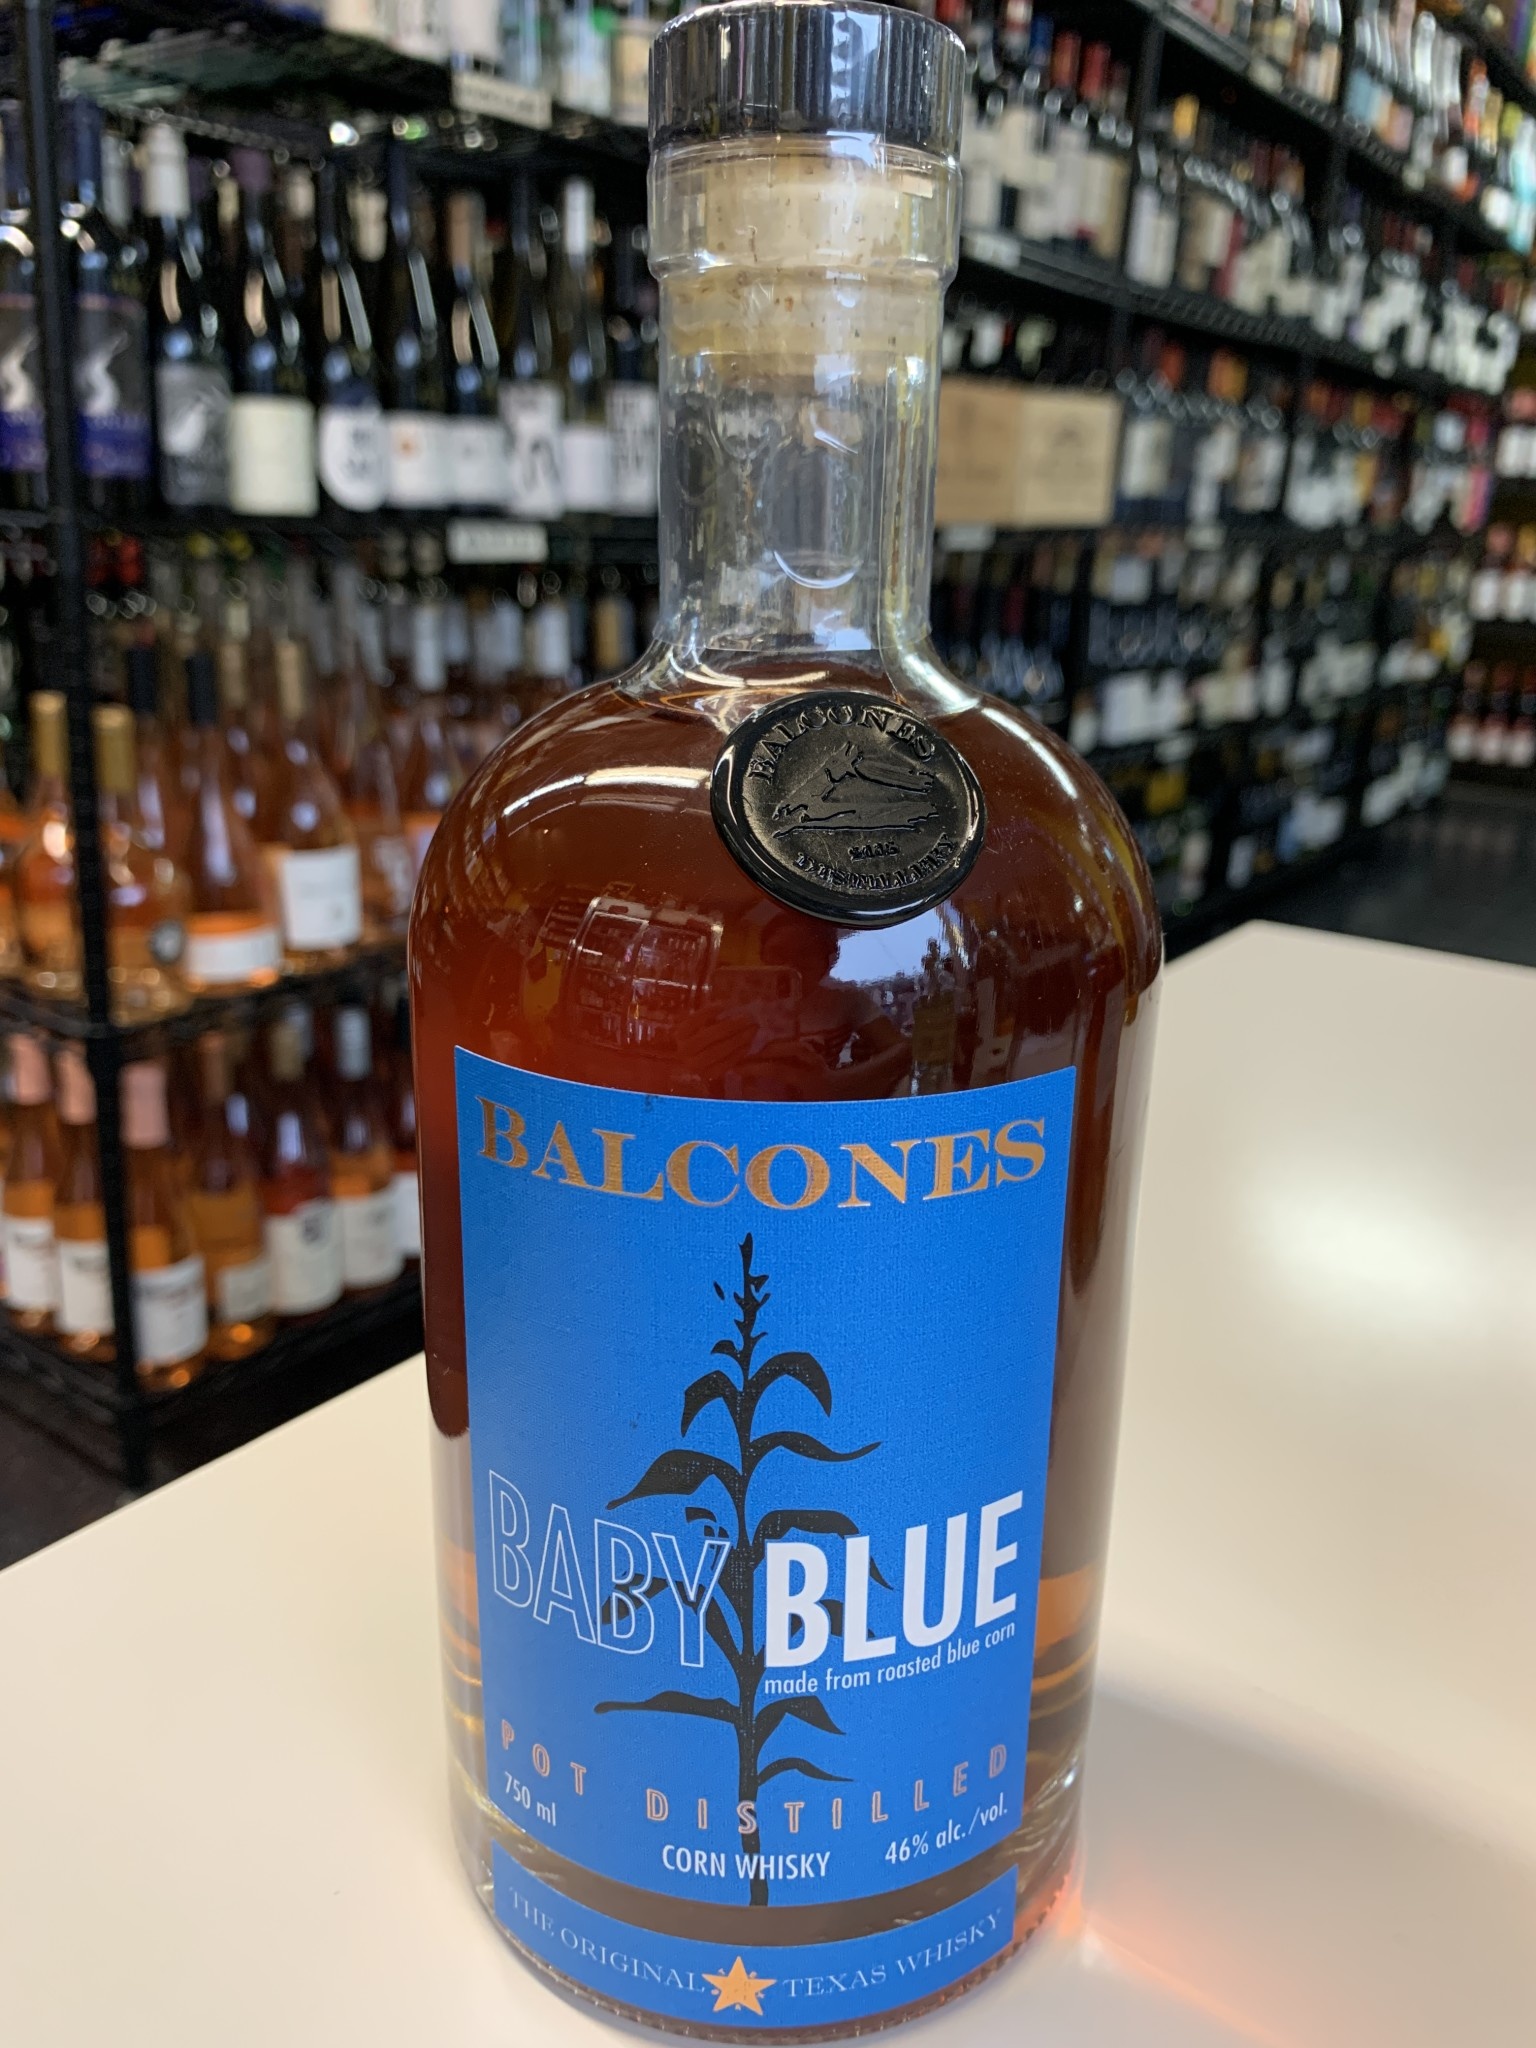 Balcones Baby Blue - The Whisky Shop - San Francisco